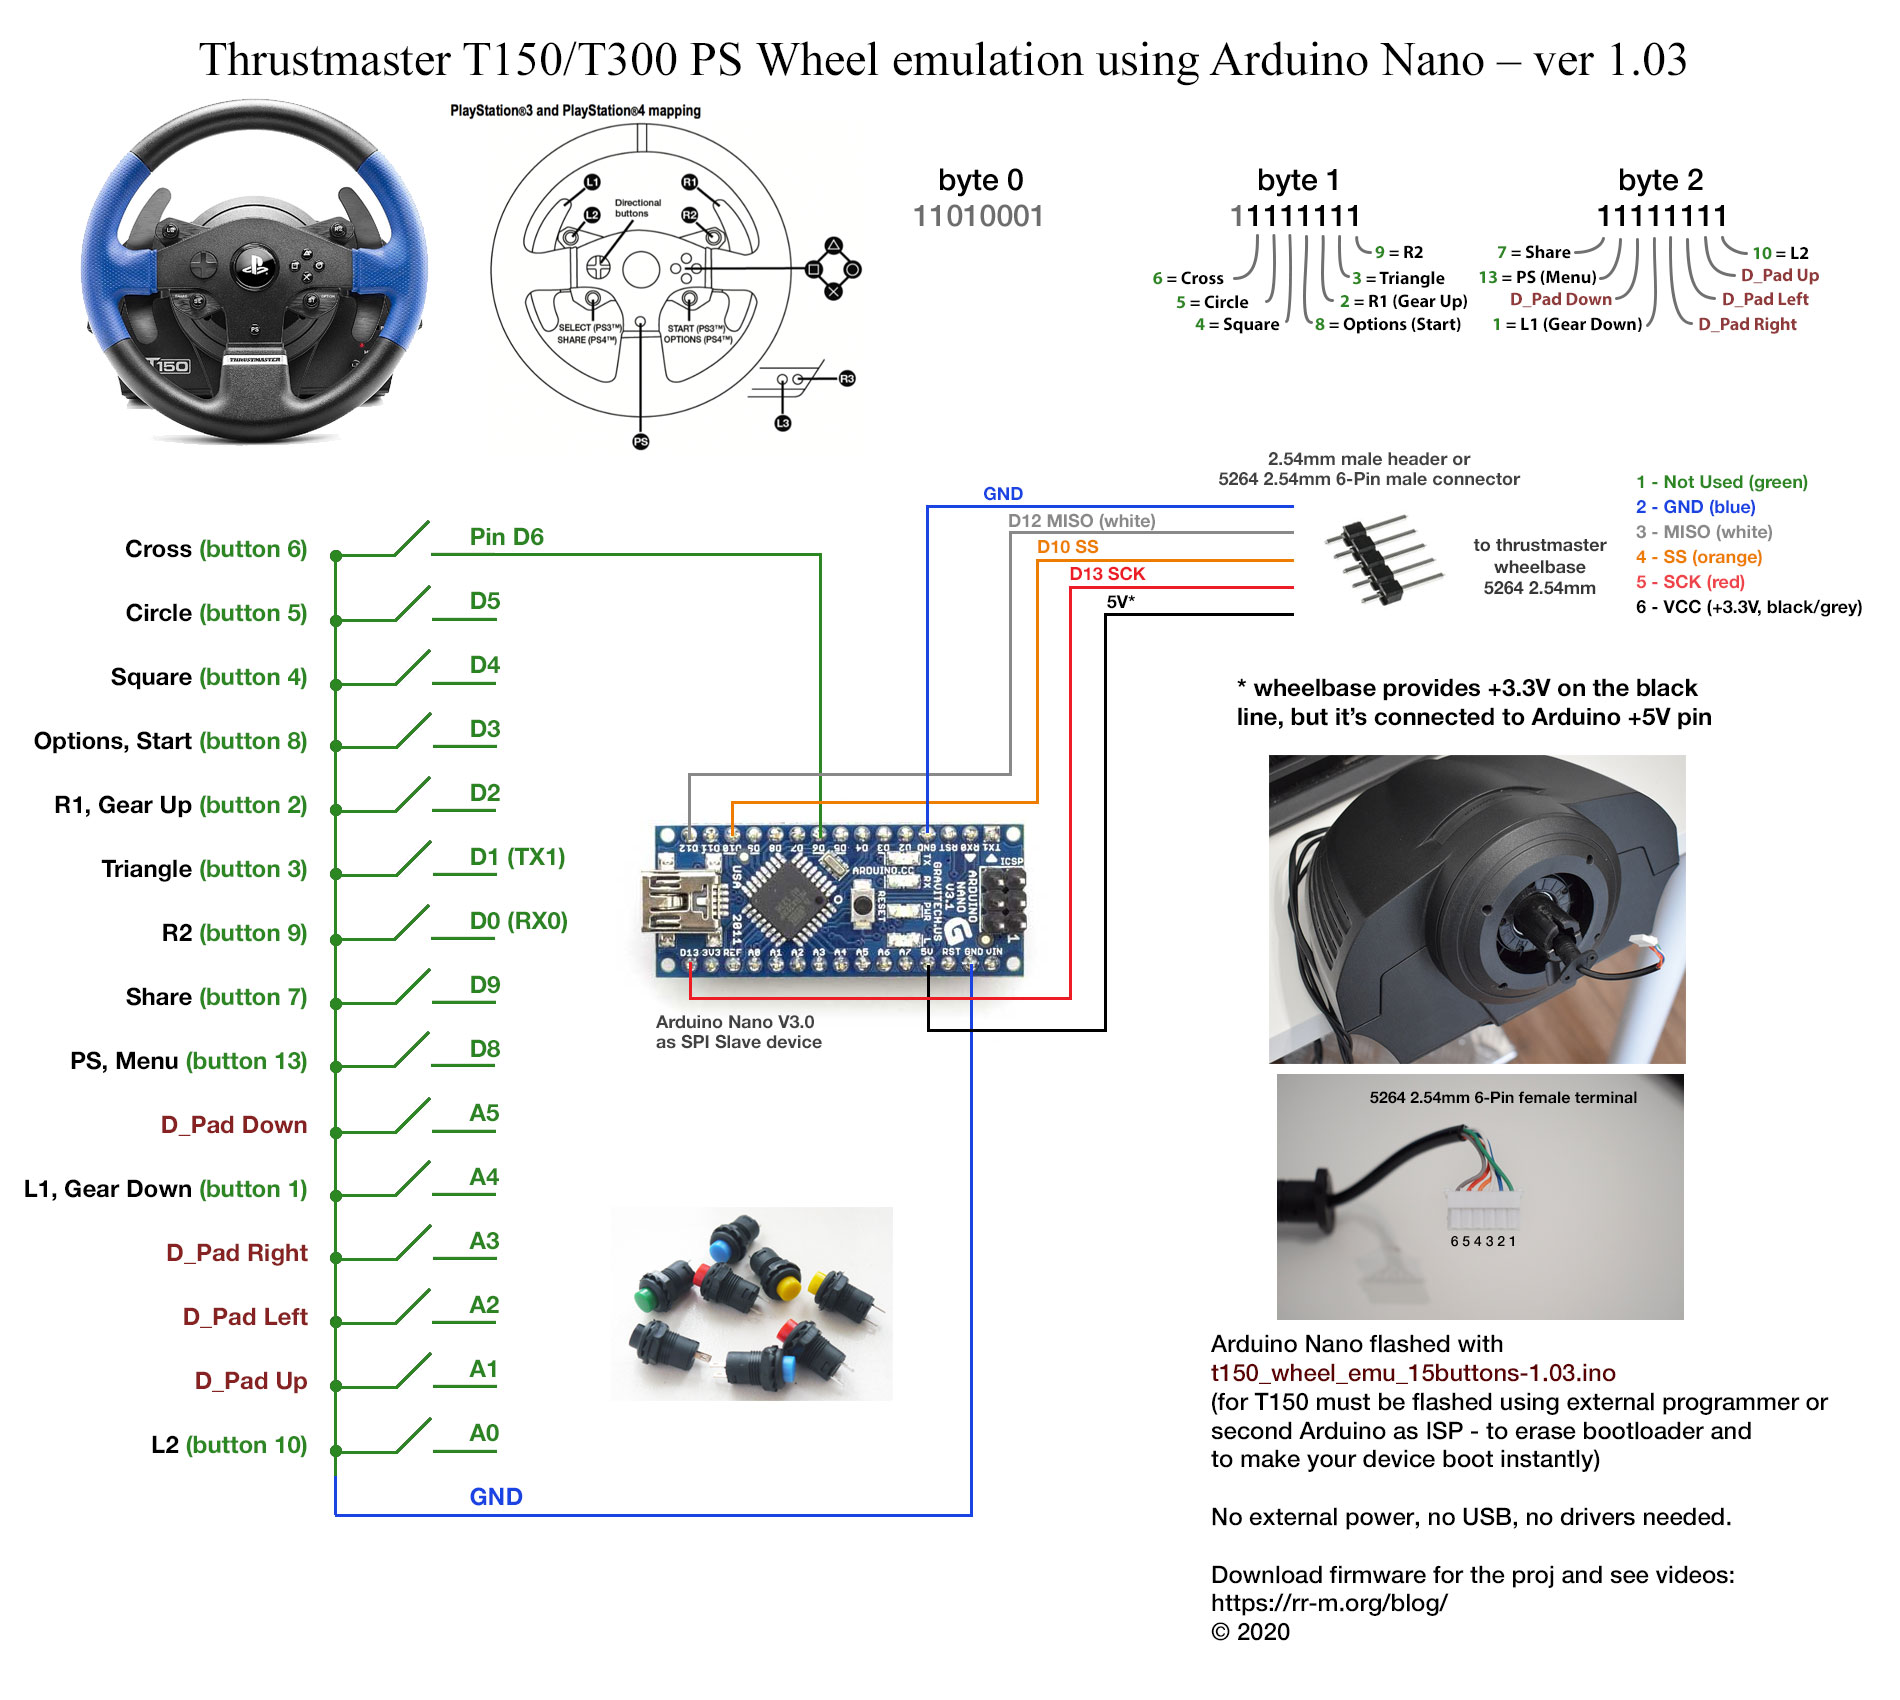 Click for hi-res version – Arduino Nano Thrustmaster T150 PS wheel emulation wiring